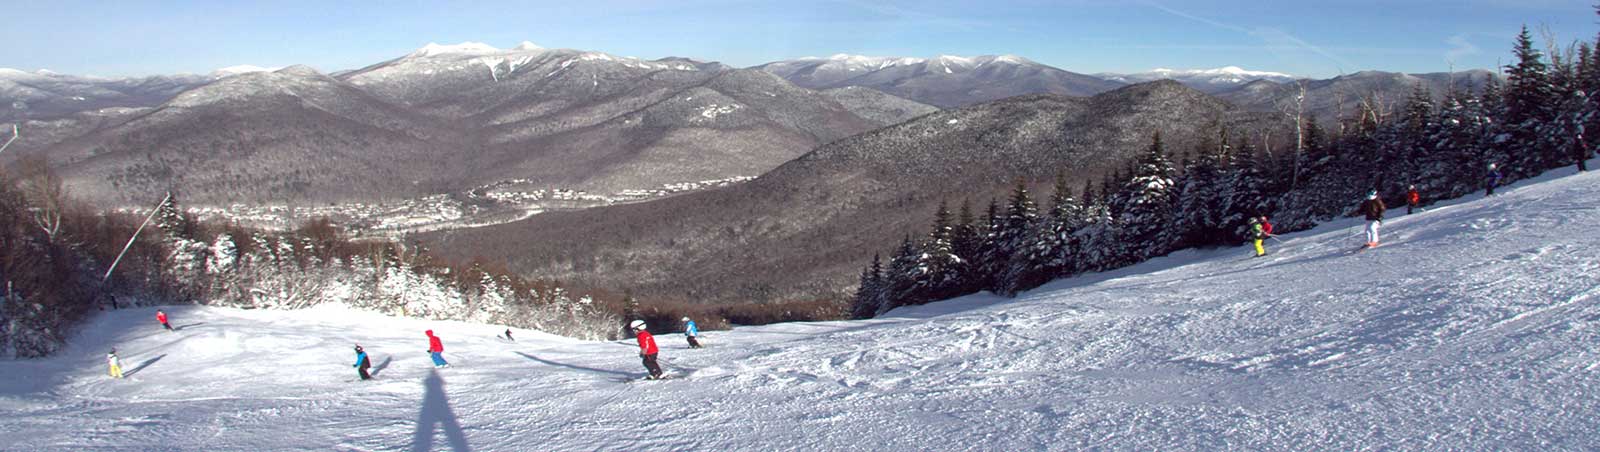 Loon Valley Skiing, New Hampshire, inspireski